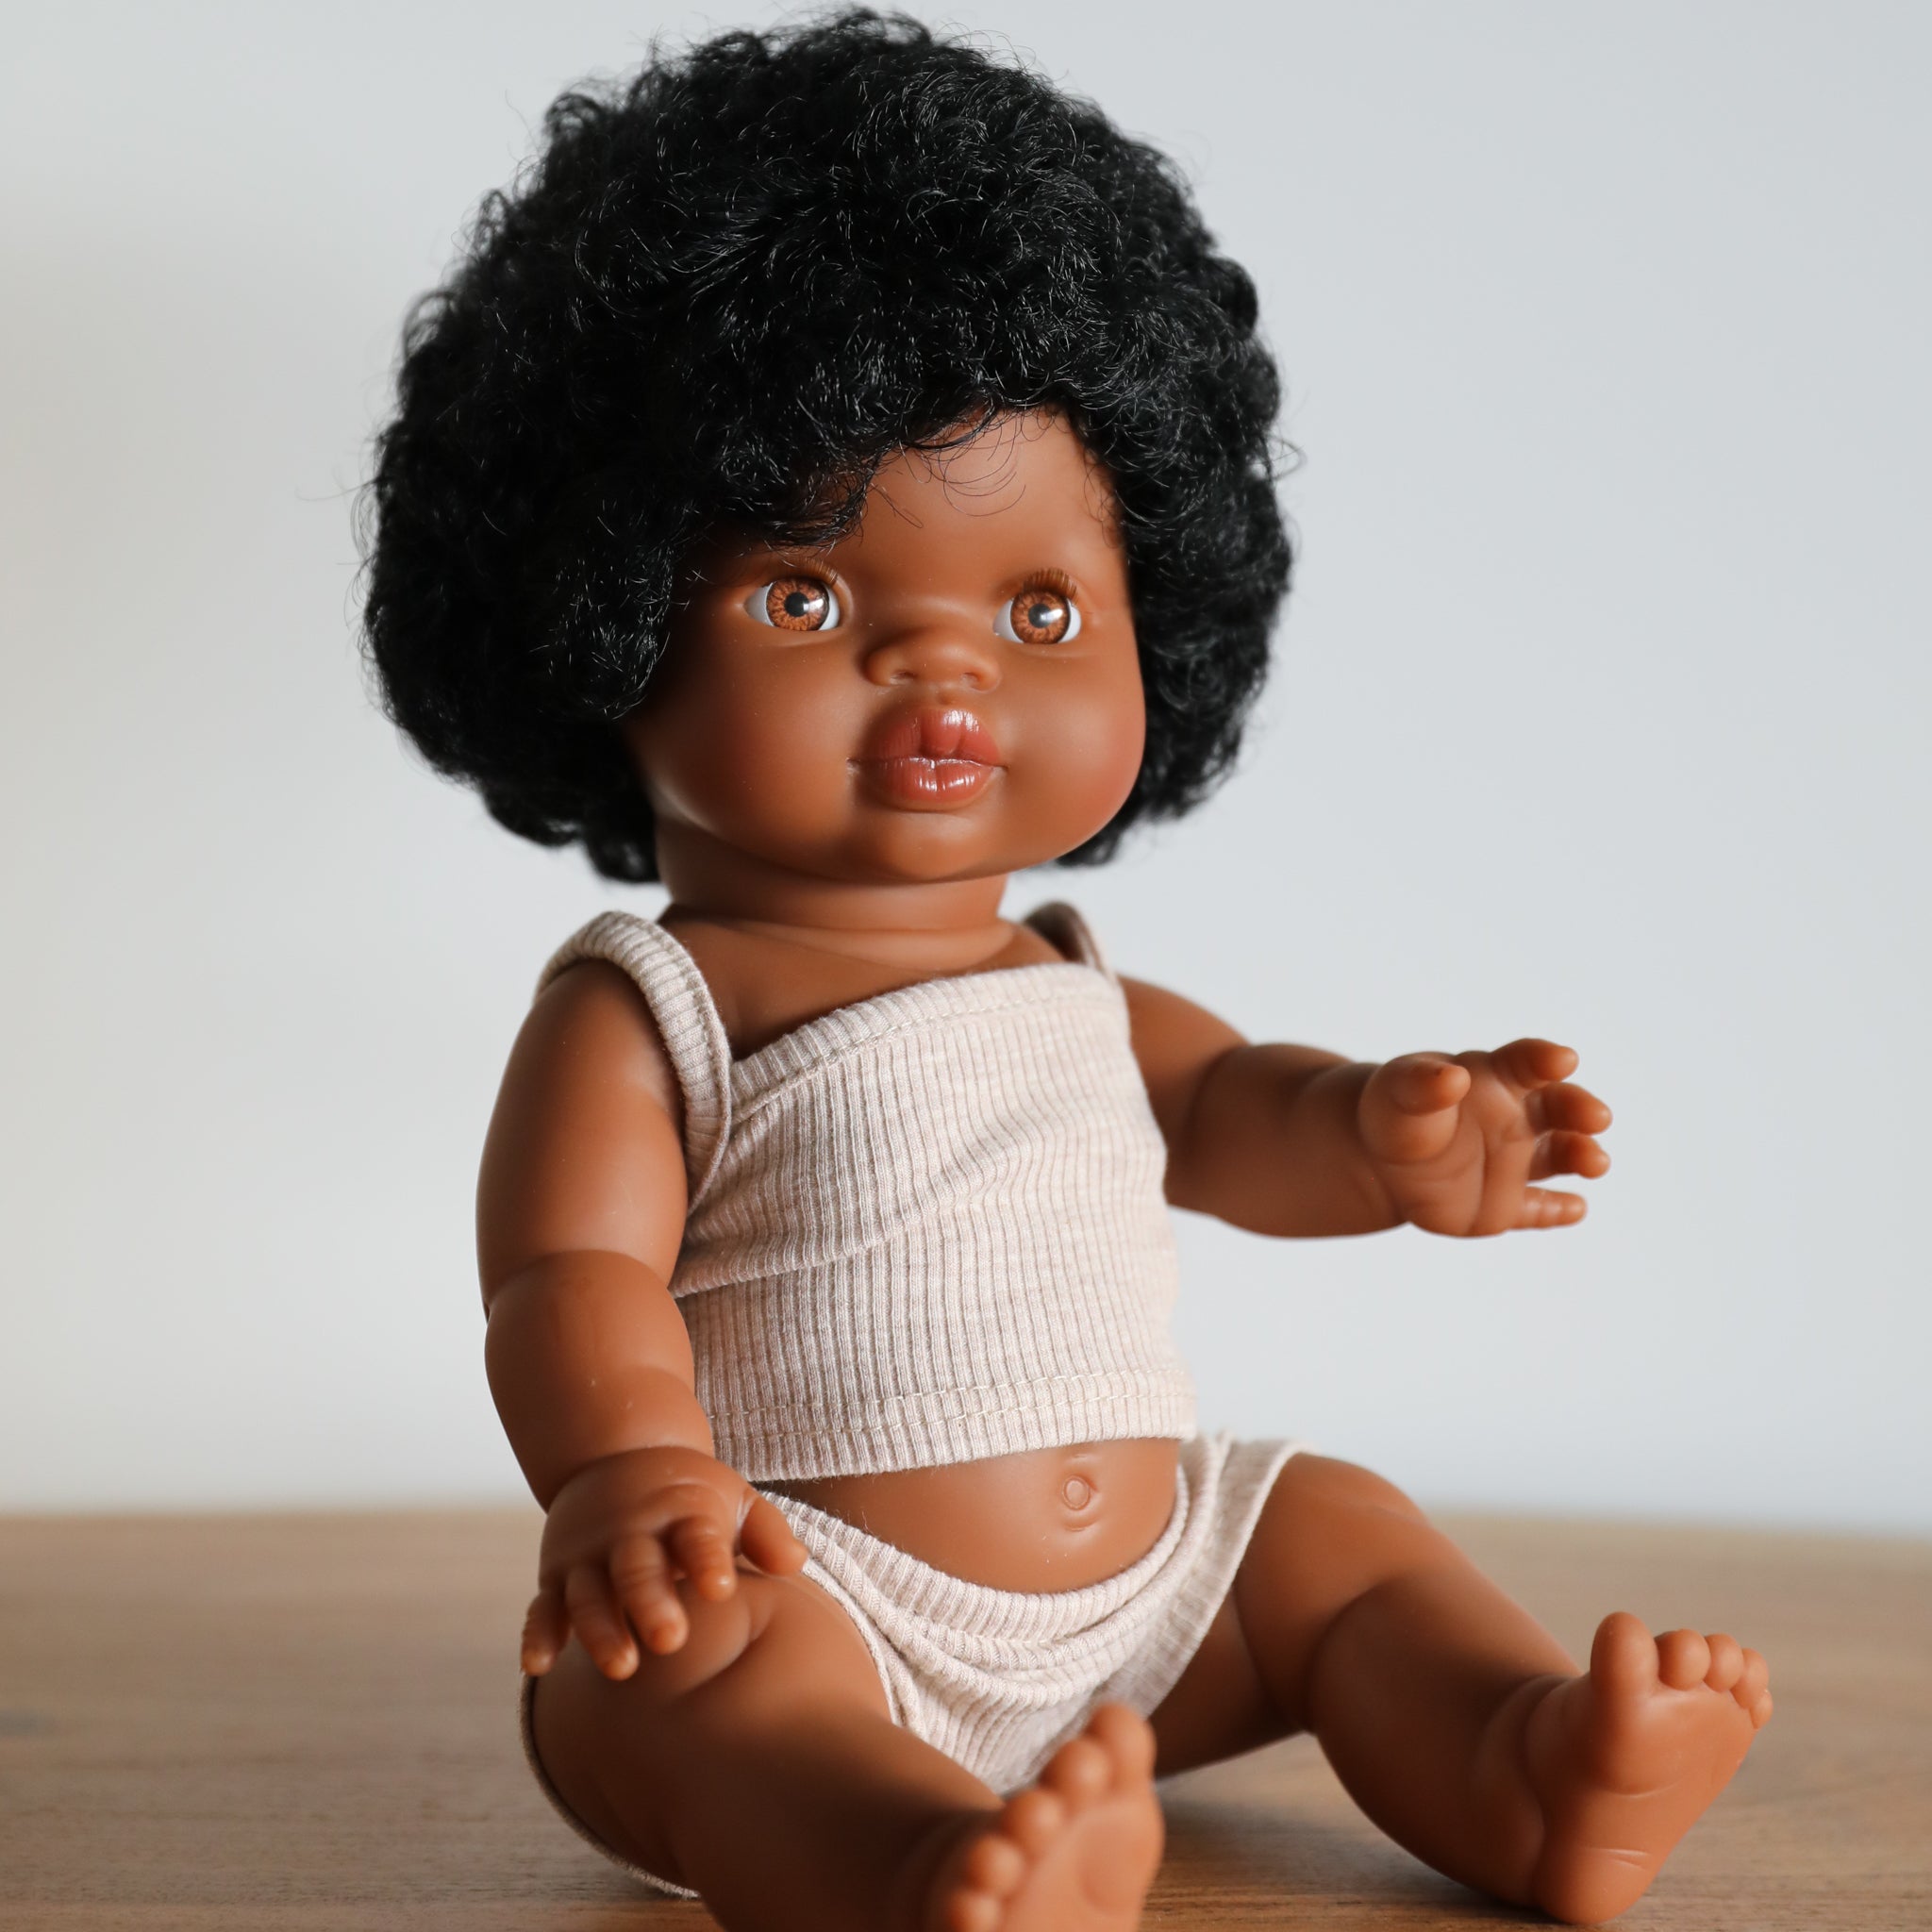 Minikane Doll - Jahia Baby Girl Doll